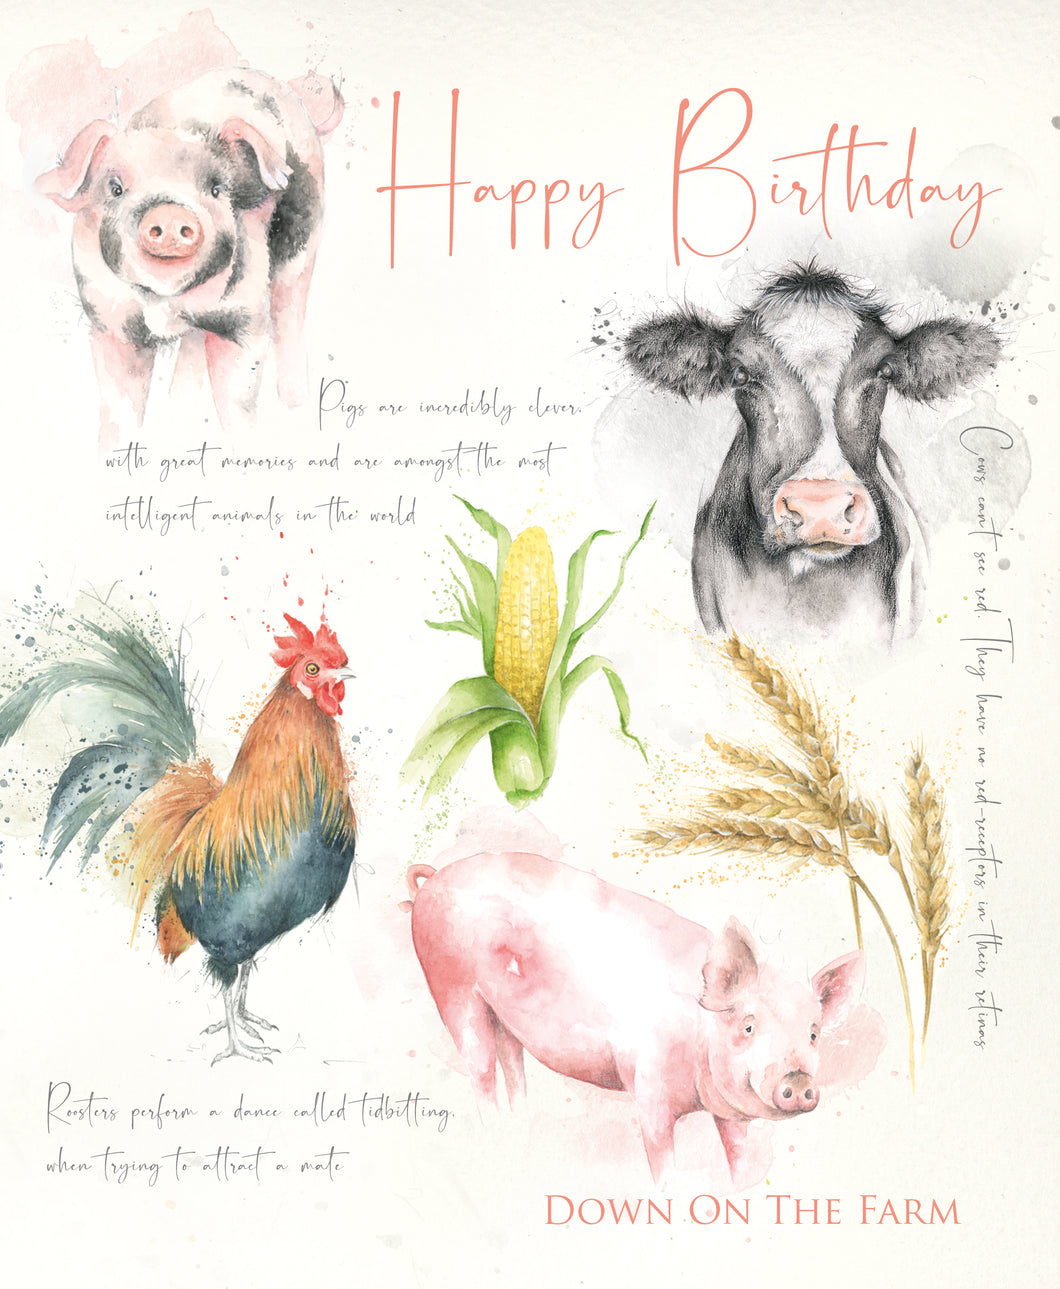 Happy Birthday Card - Down on the Farm